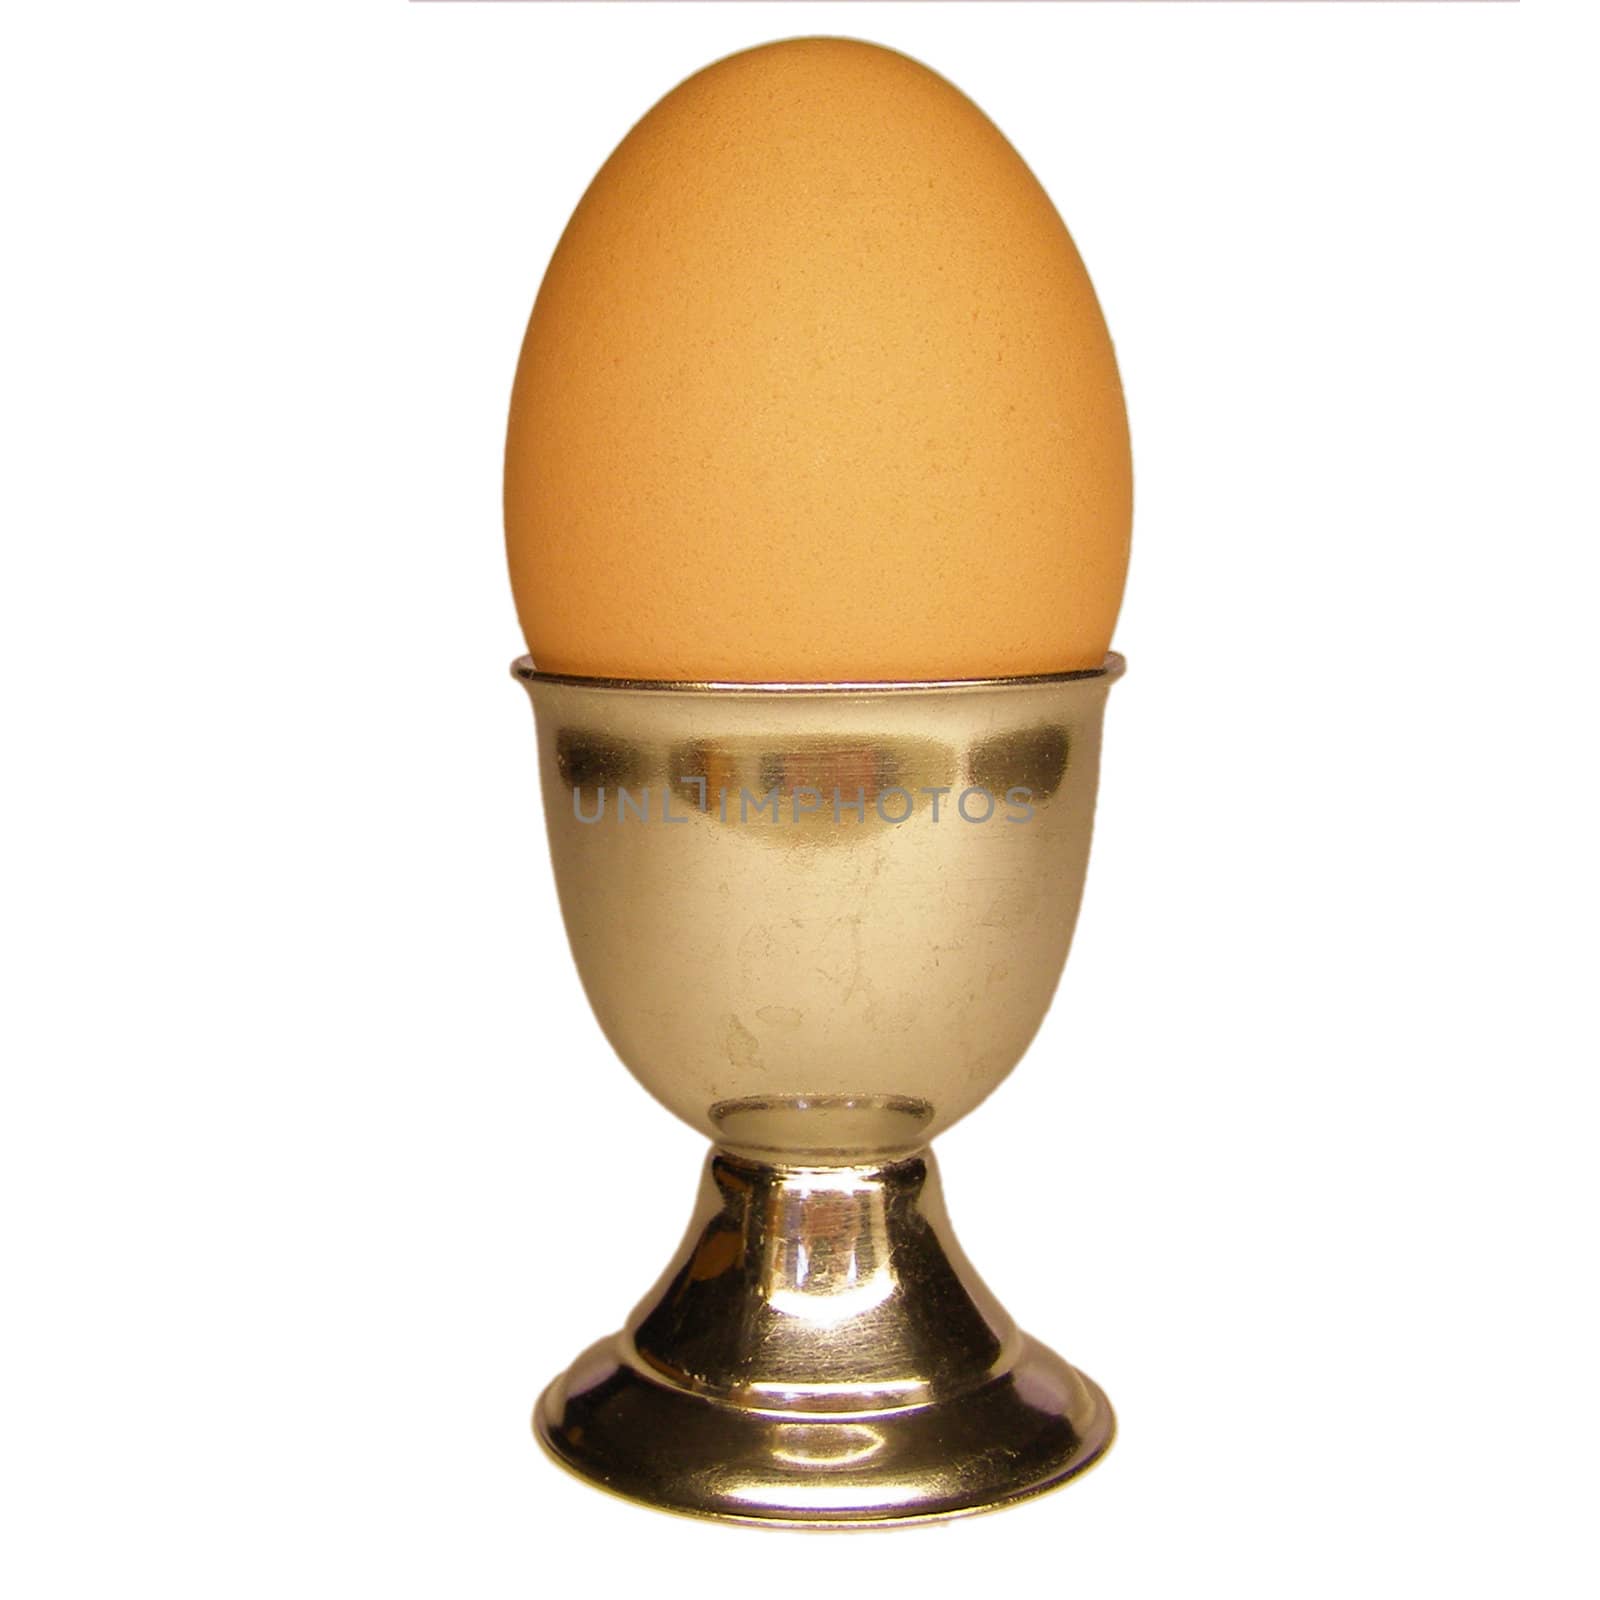 Egg by claudiodivizia